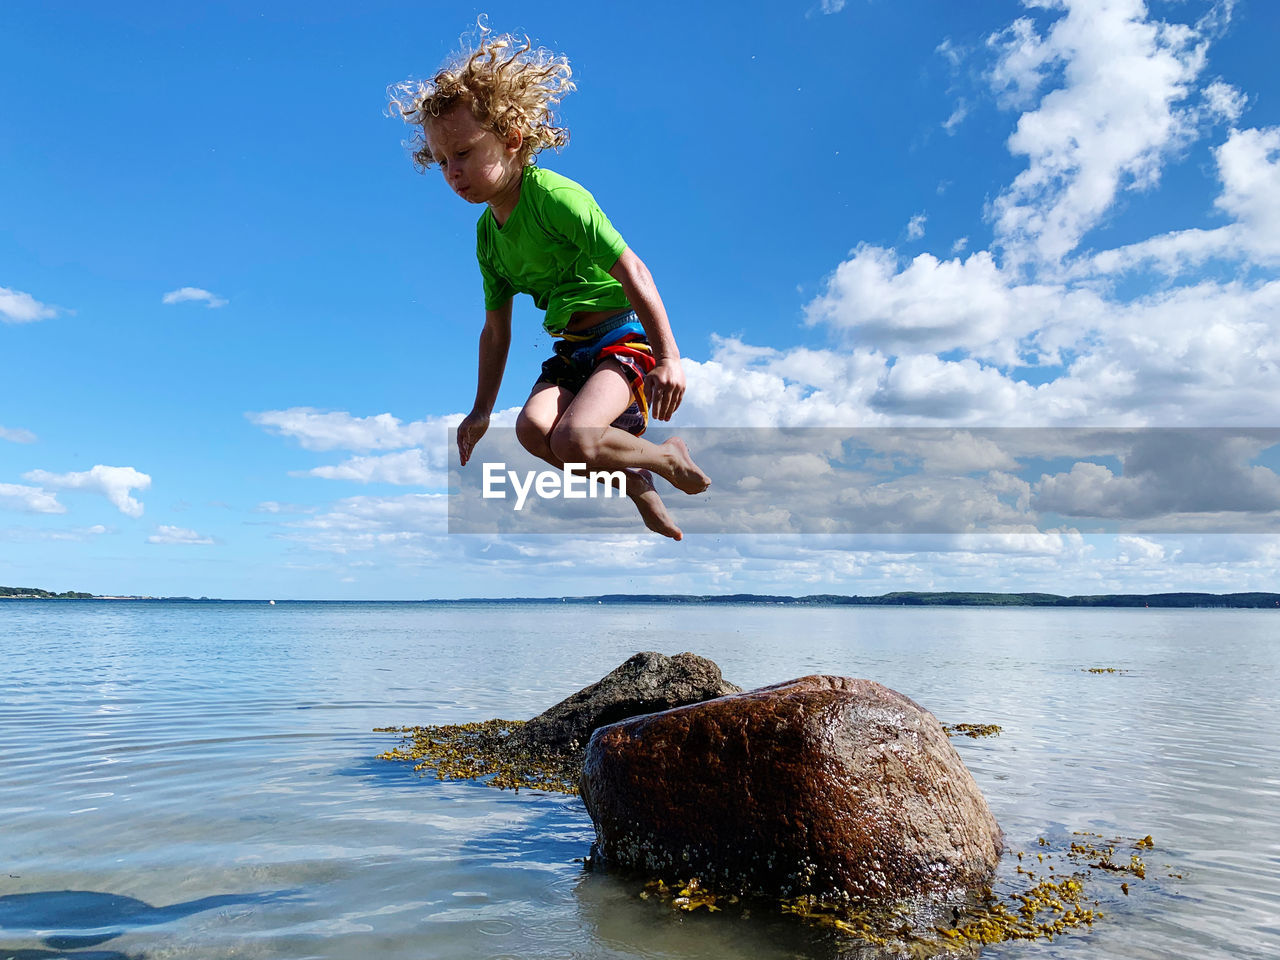 Boy jumping on rock in sea against sky